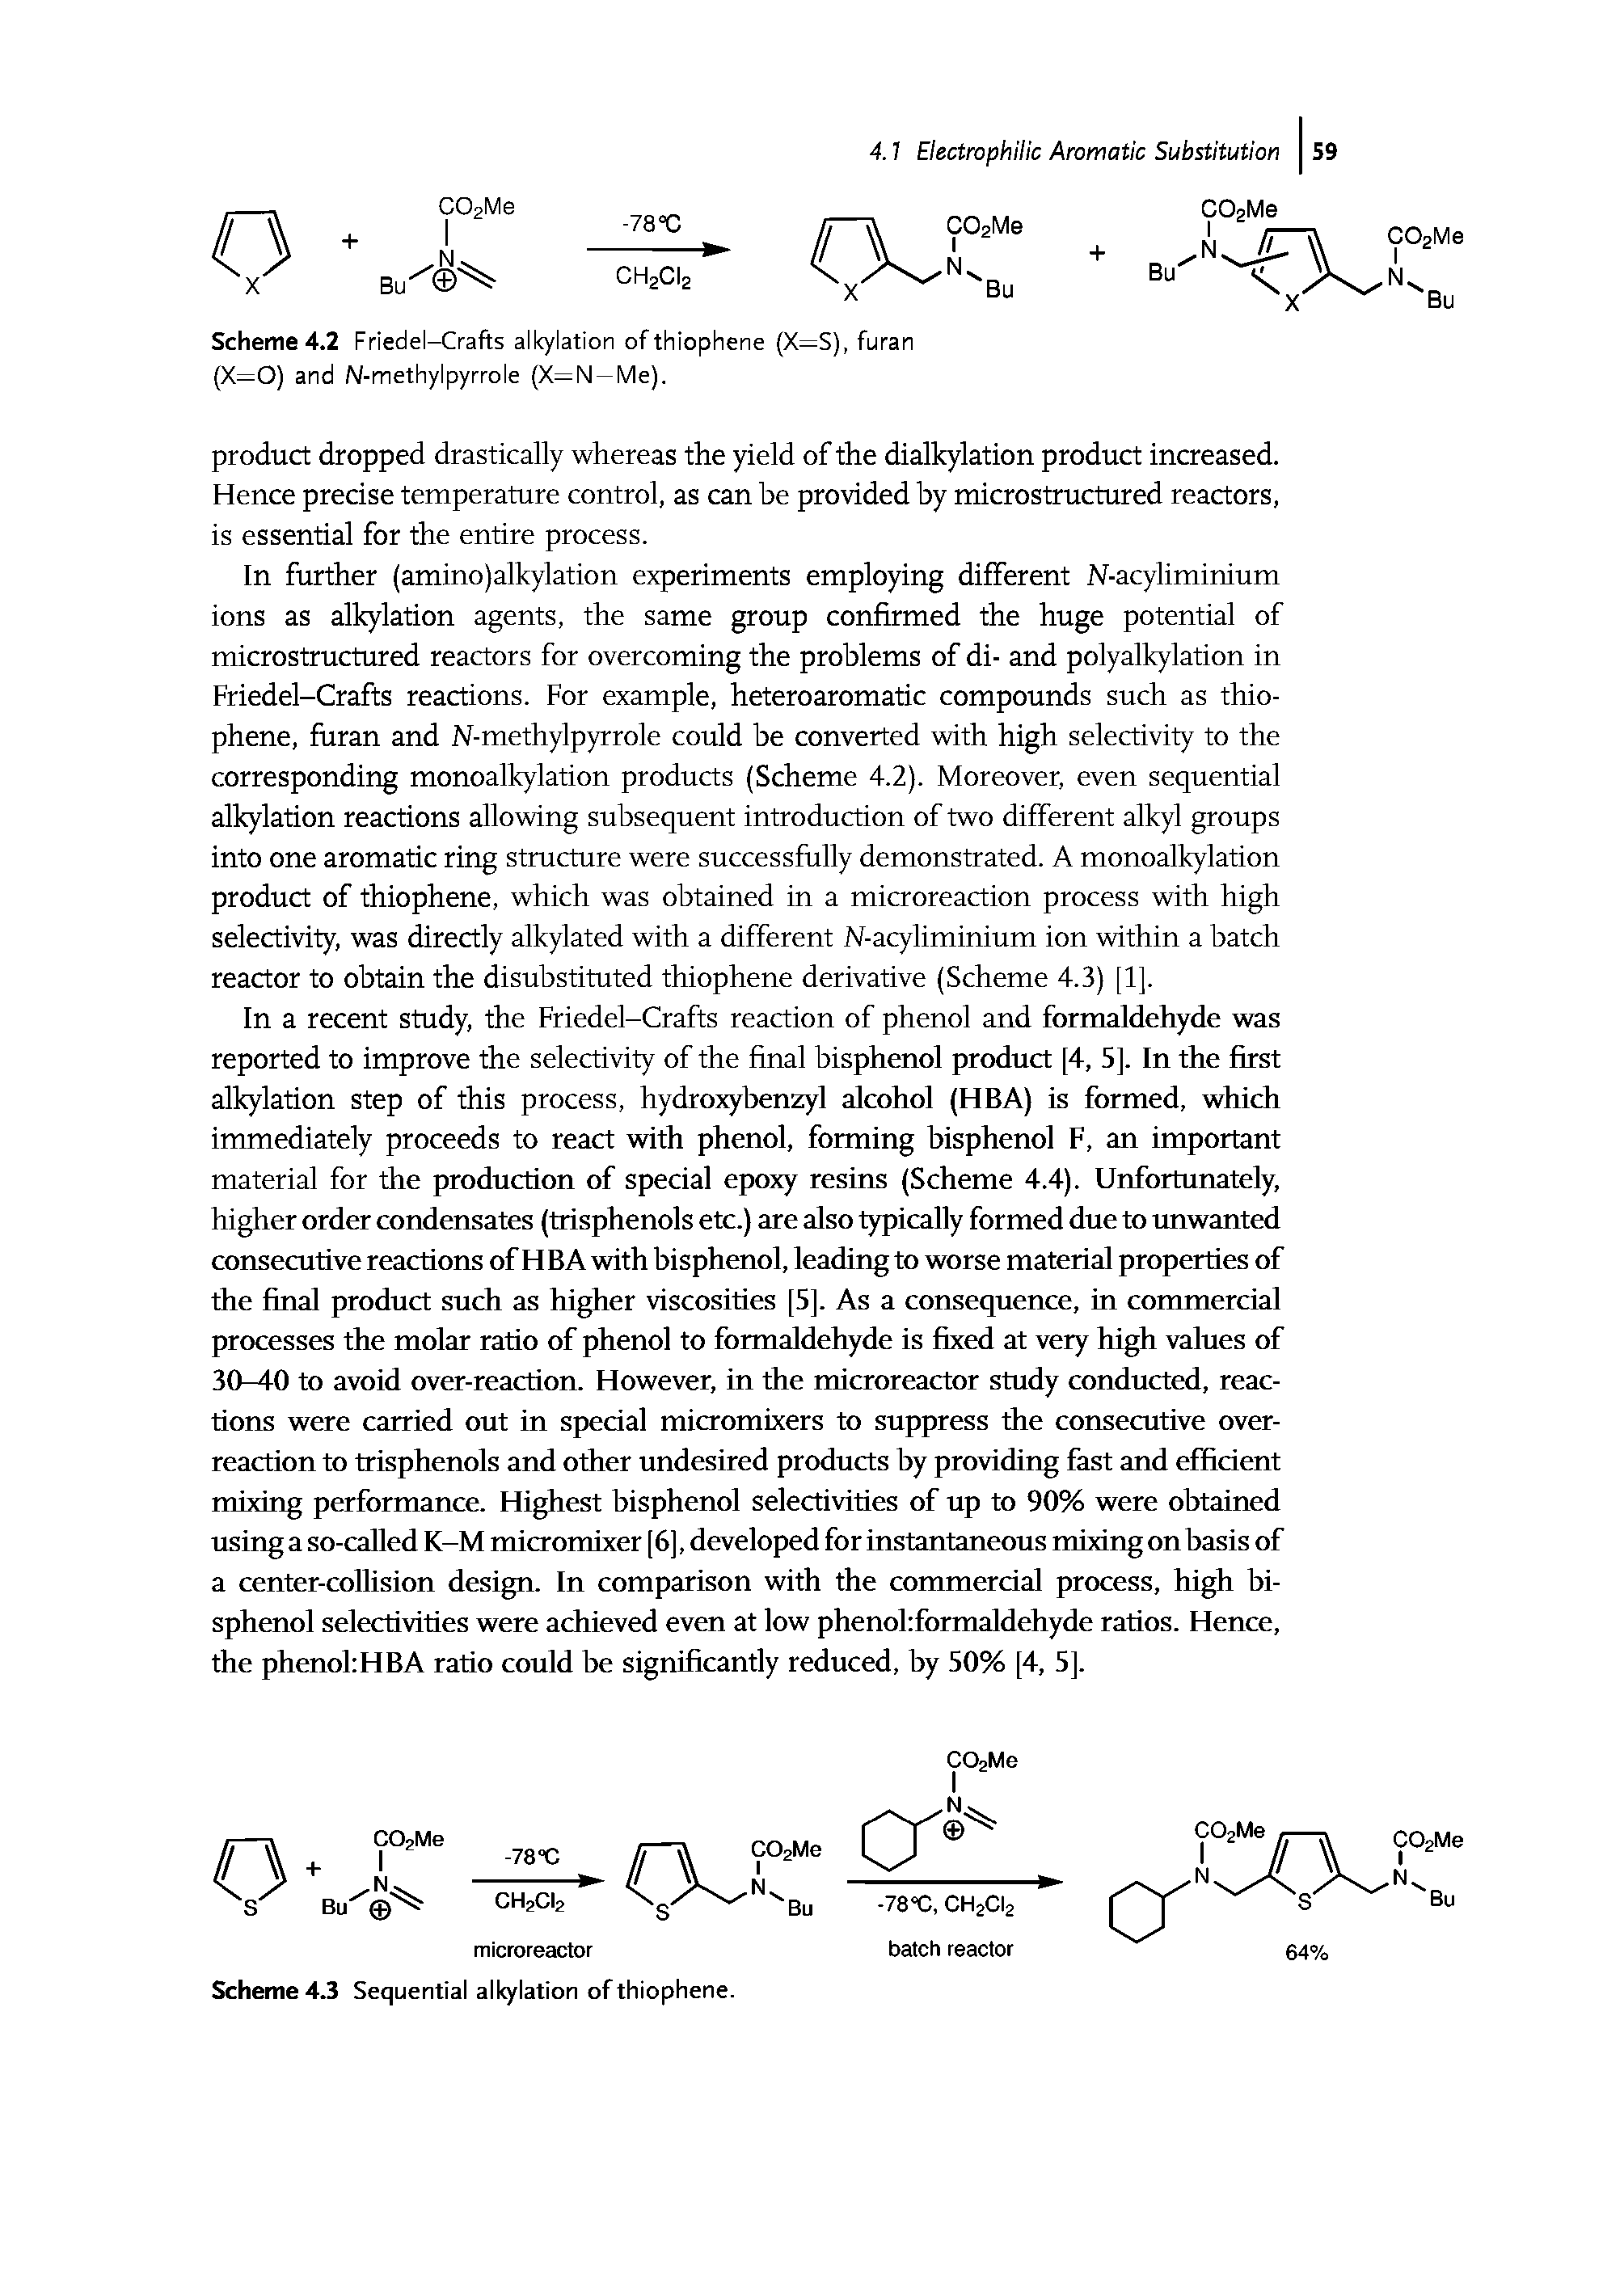 Scheme 4.2 Friedel-Crafts alkylation of thiophene P<=S), furan (X=0) and N-methylpyrrole (X=N-Me).